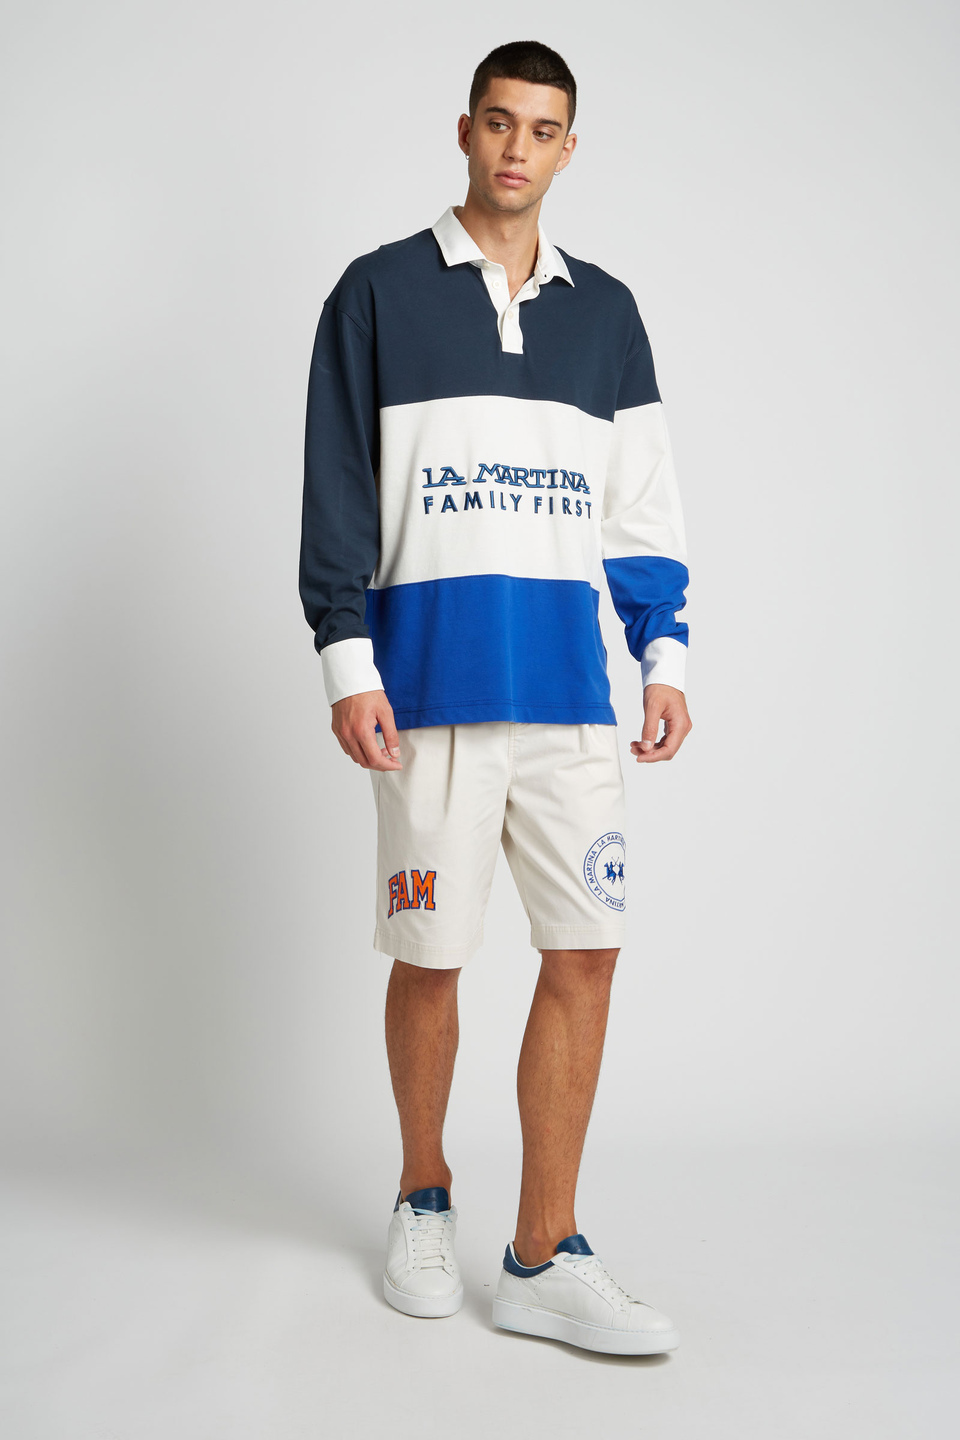 Herren-Poloshirt aus Piqué mit langem Arm, oversized Modell | La Martina - Official Online Shop